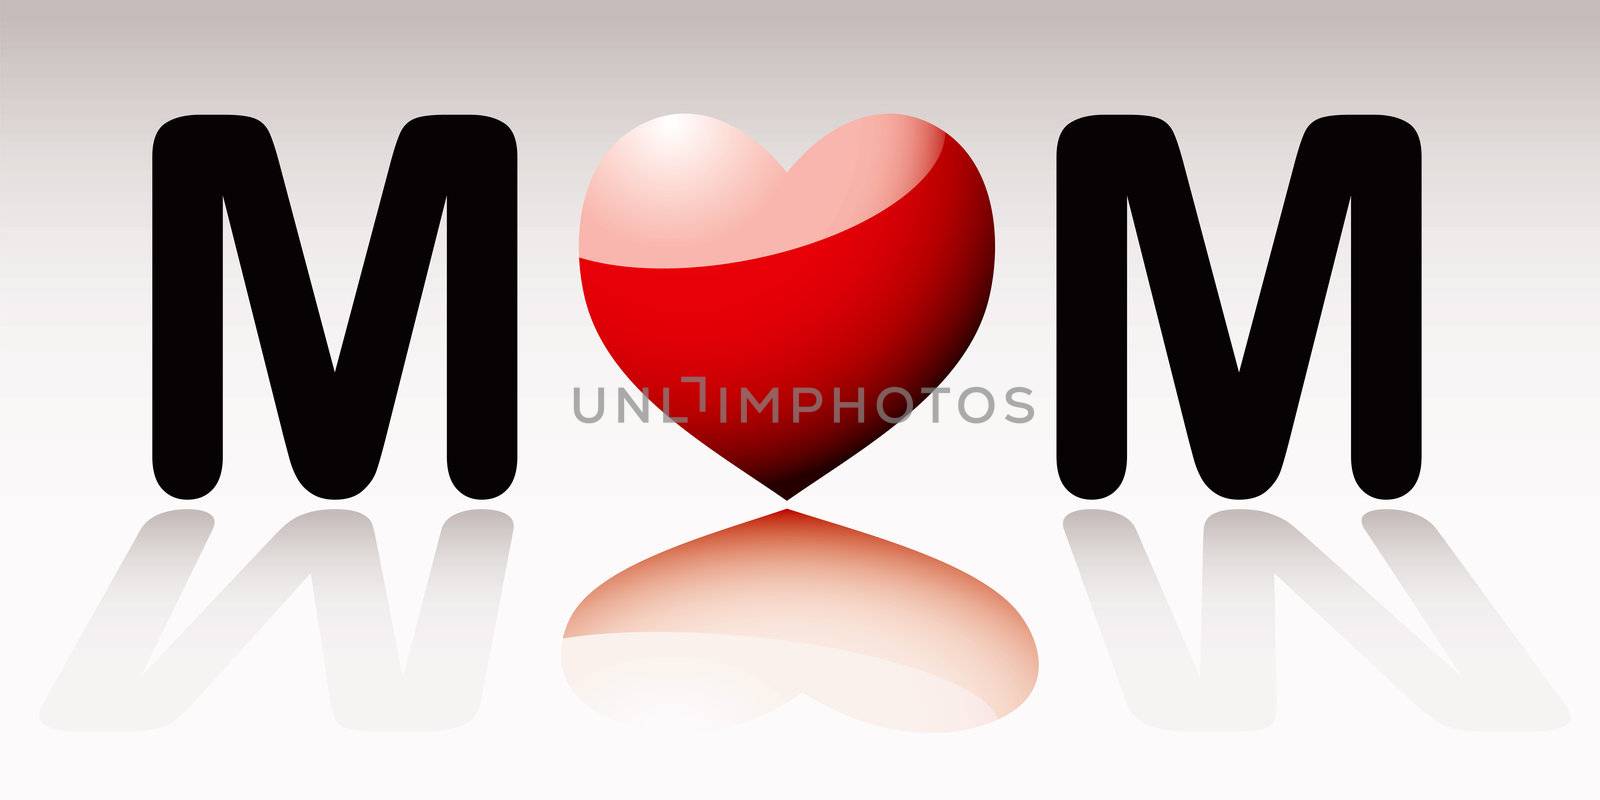 Love mum by nicemonkey